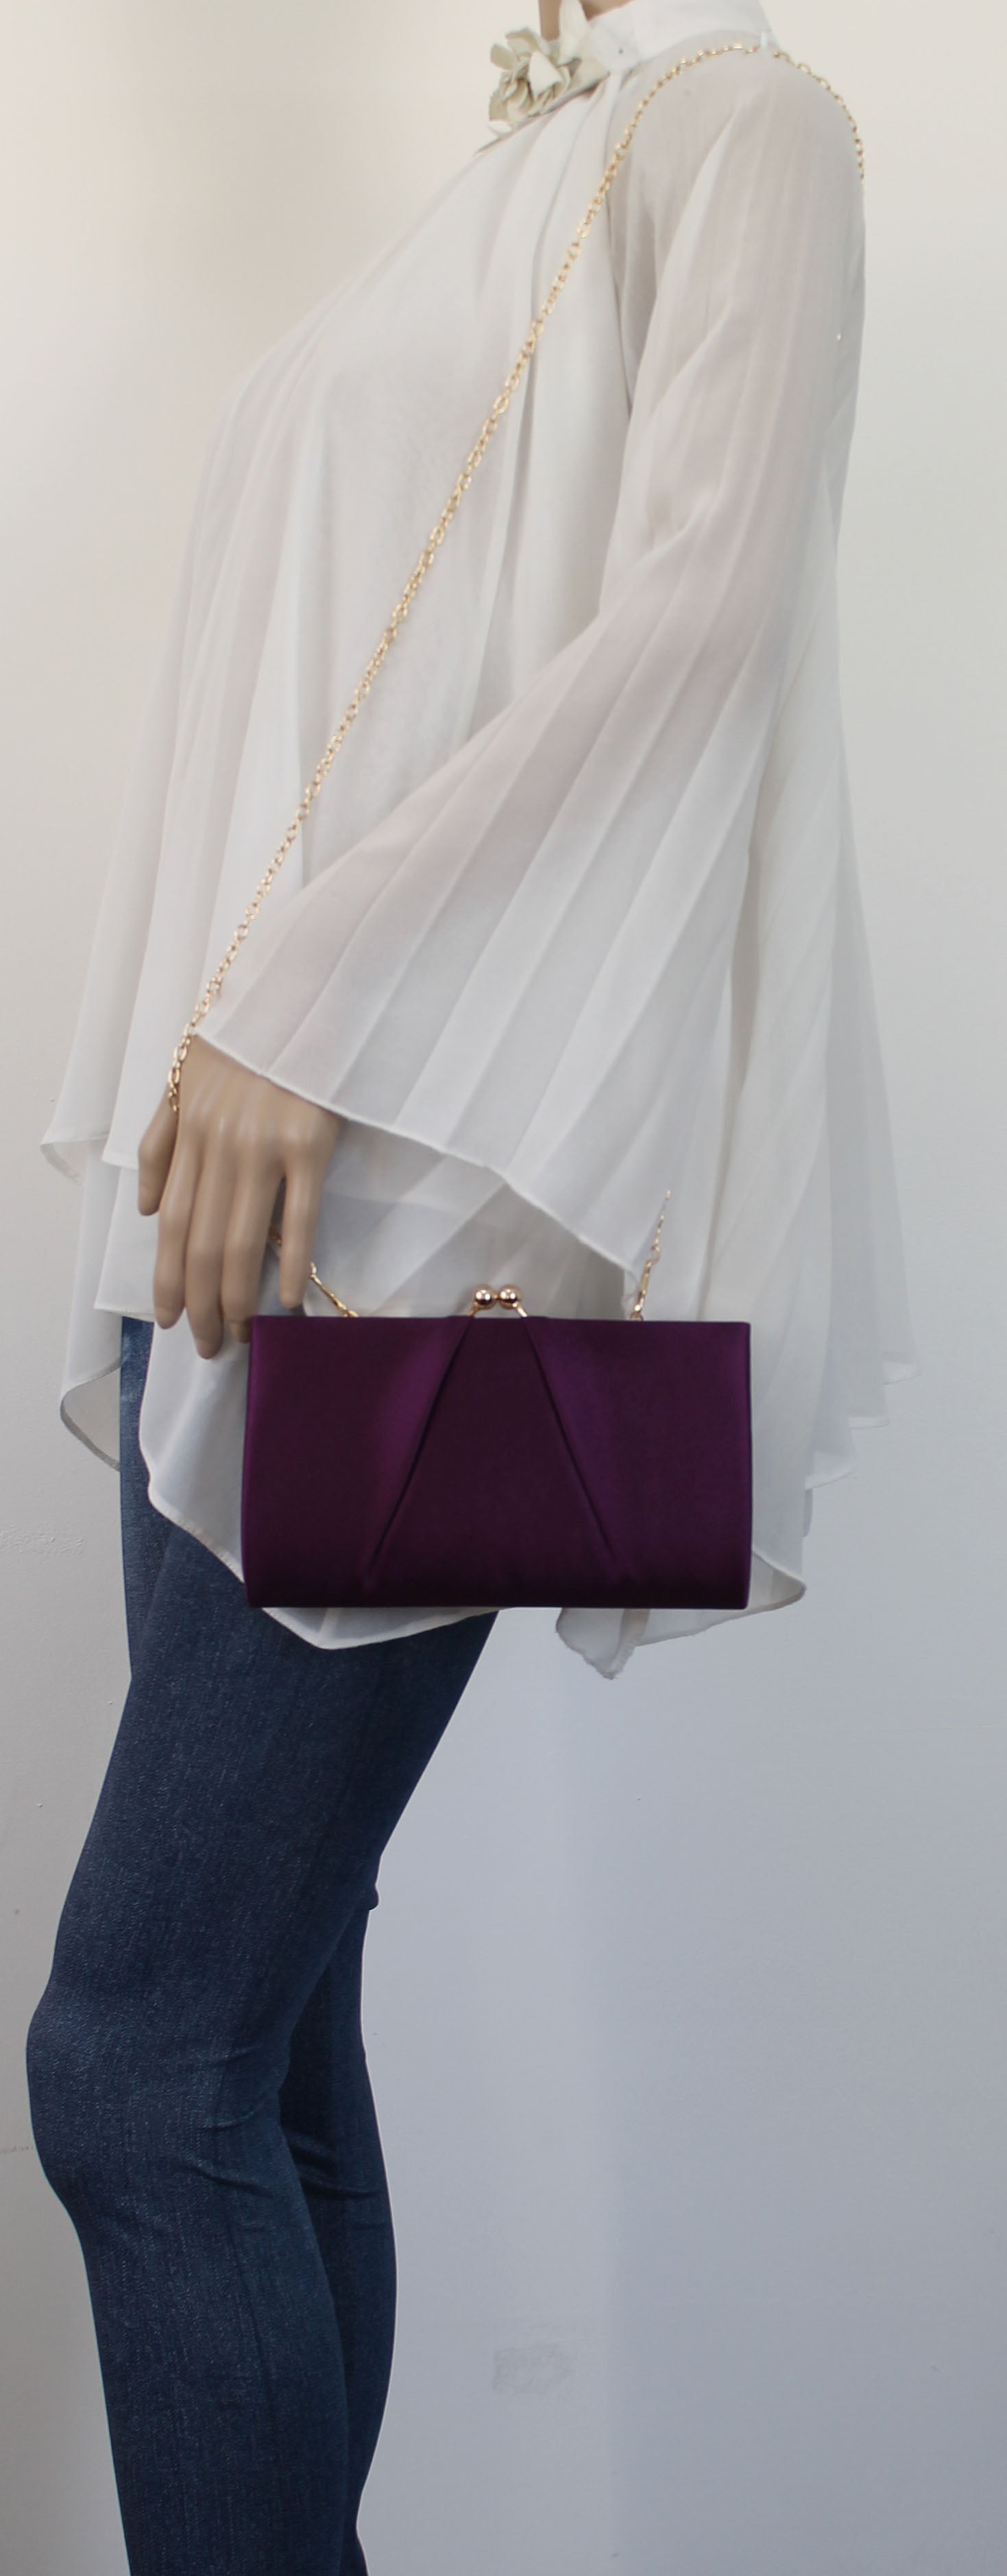 SWANKYSWANS Katy Satin Clutch Bag Purple Cute Cheap Clutch Bag For Weddings School and Work